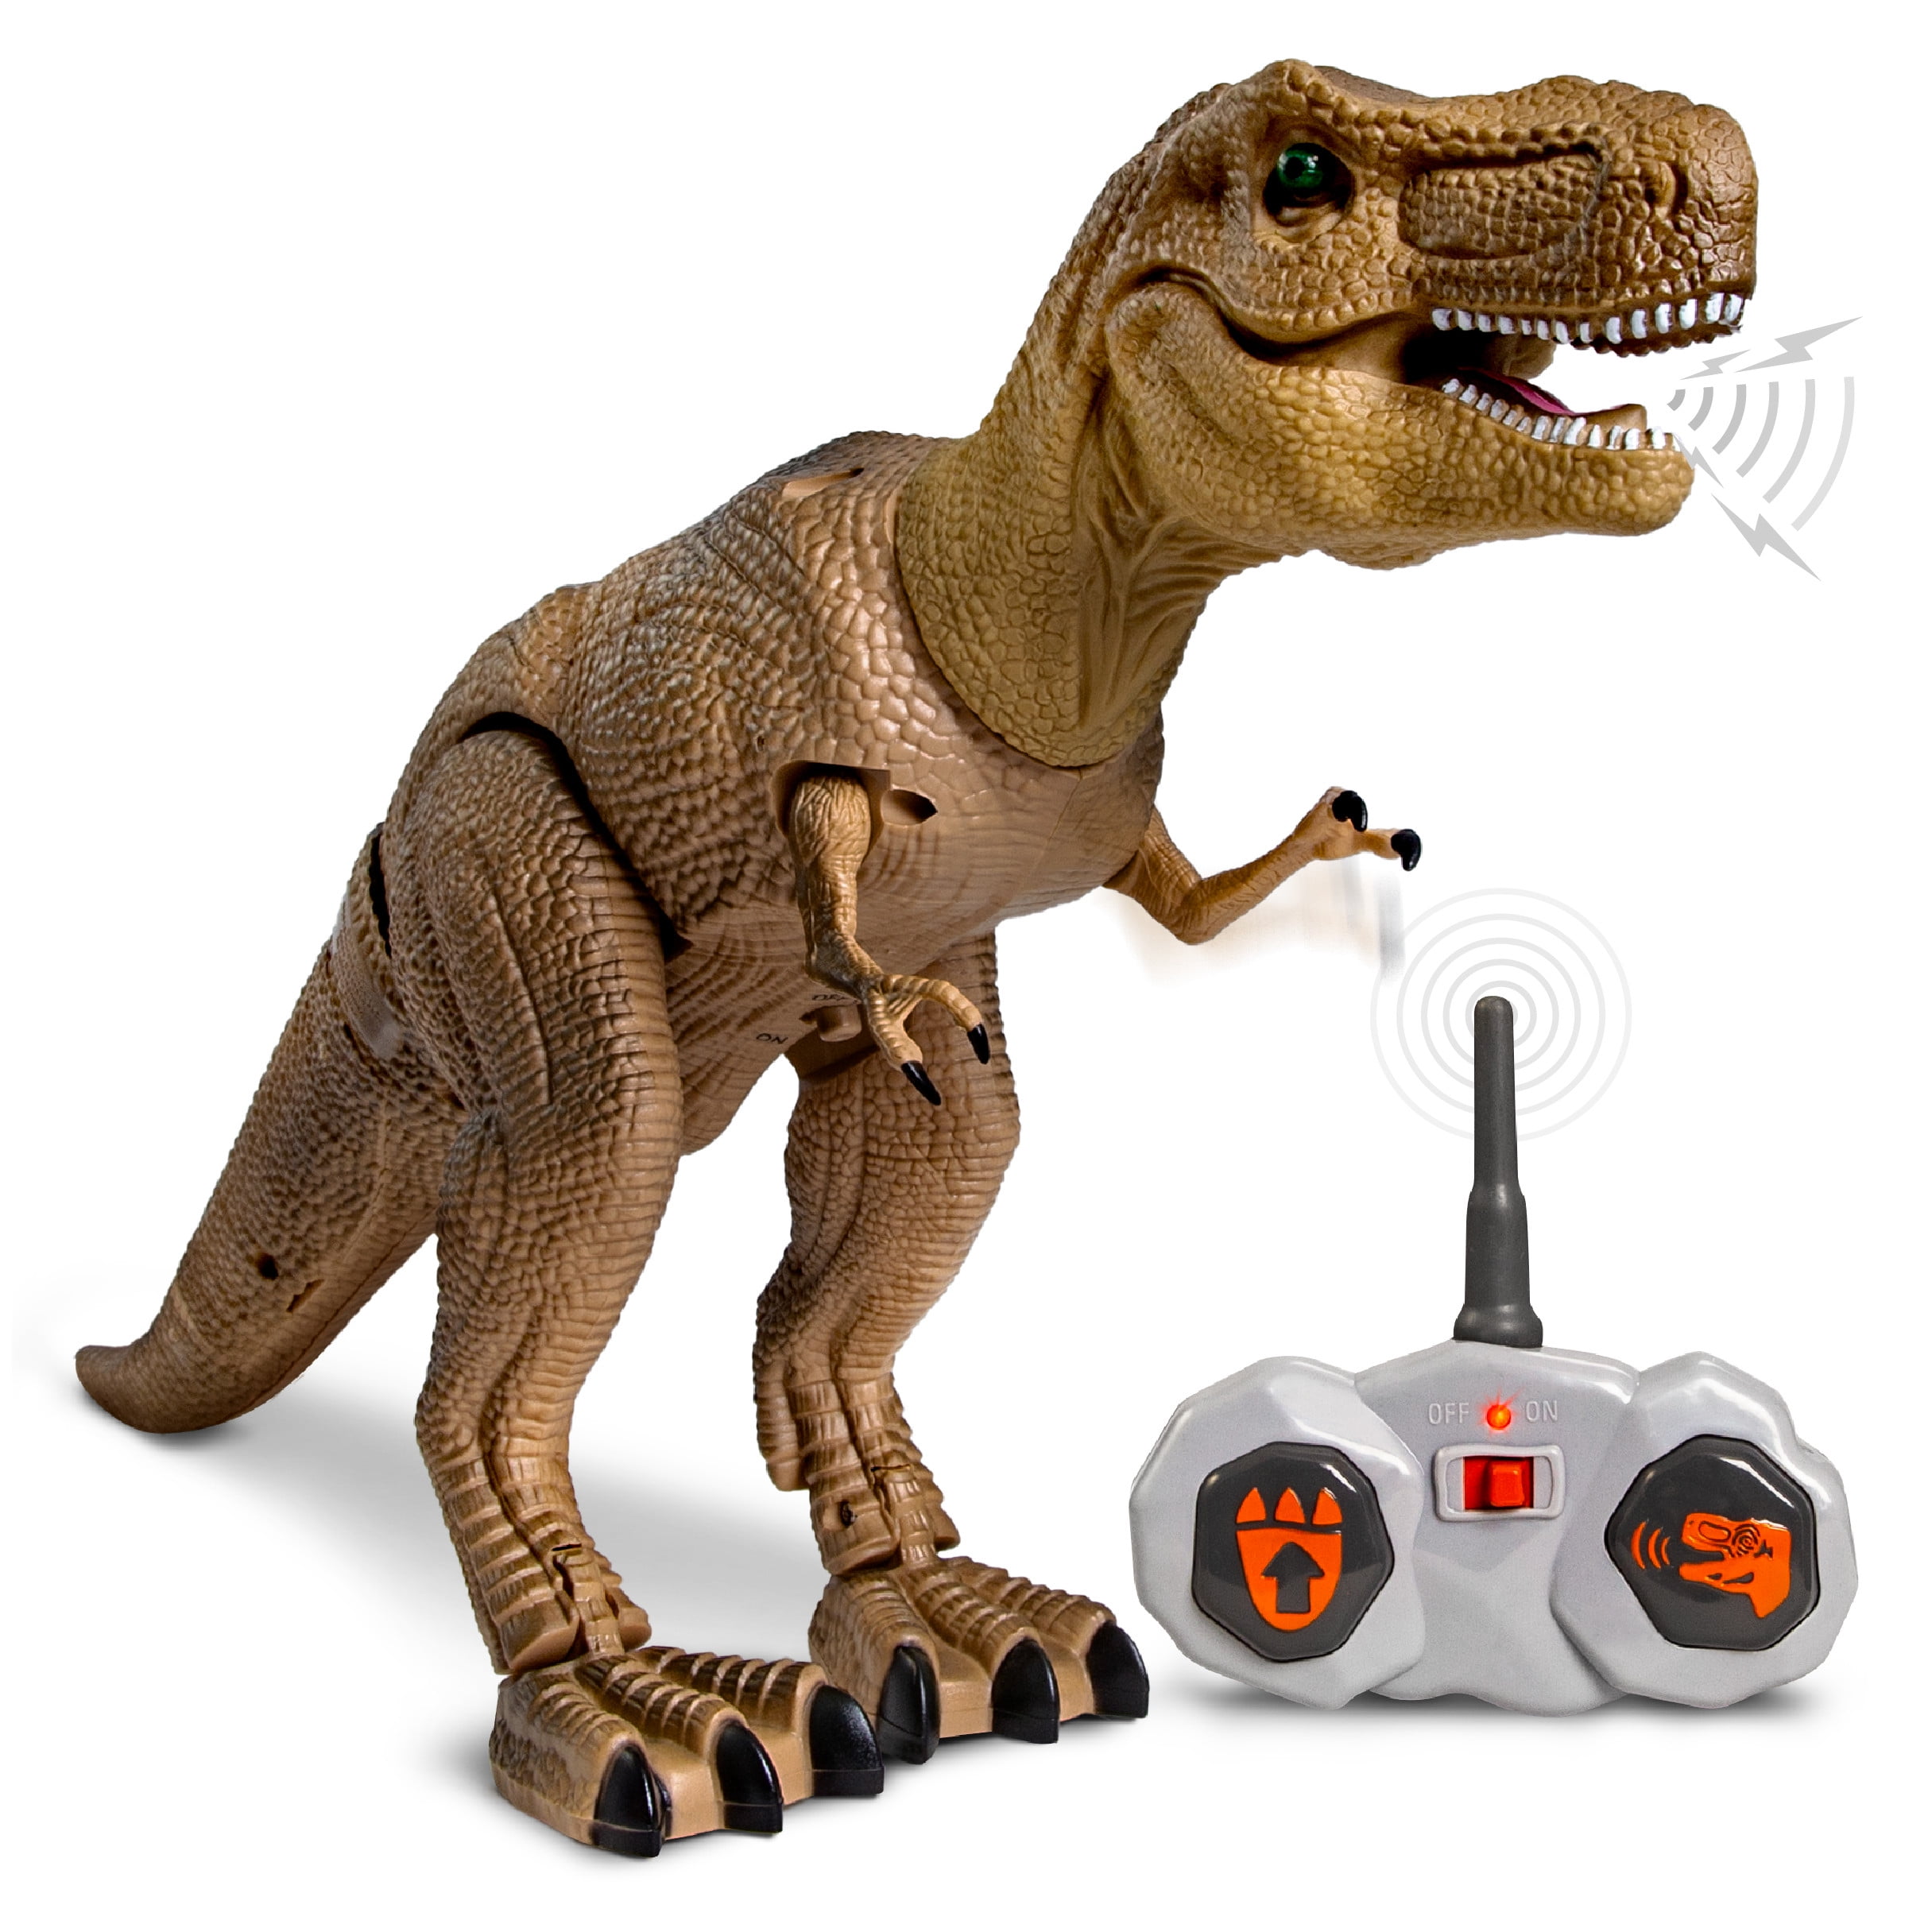 Betheaces Remote Control Dinosaur Toy Kids Electric Dinosaur Toy RC Animal Toys 